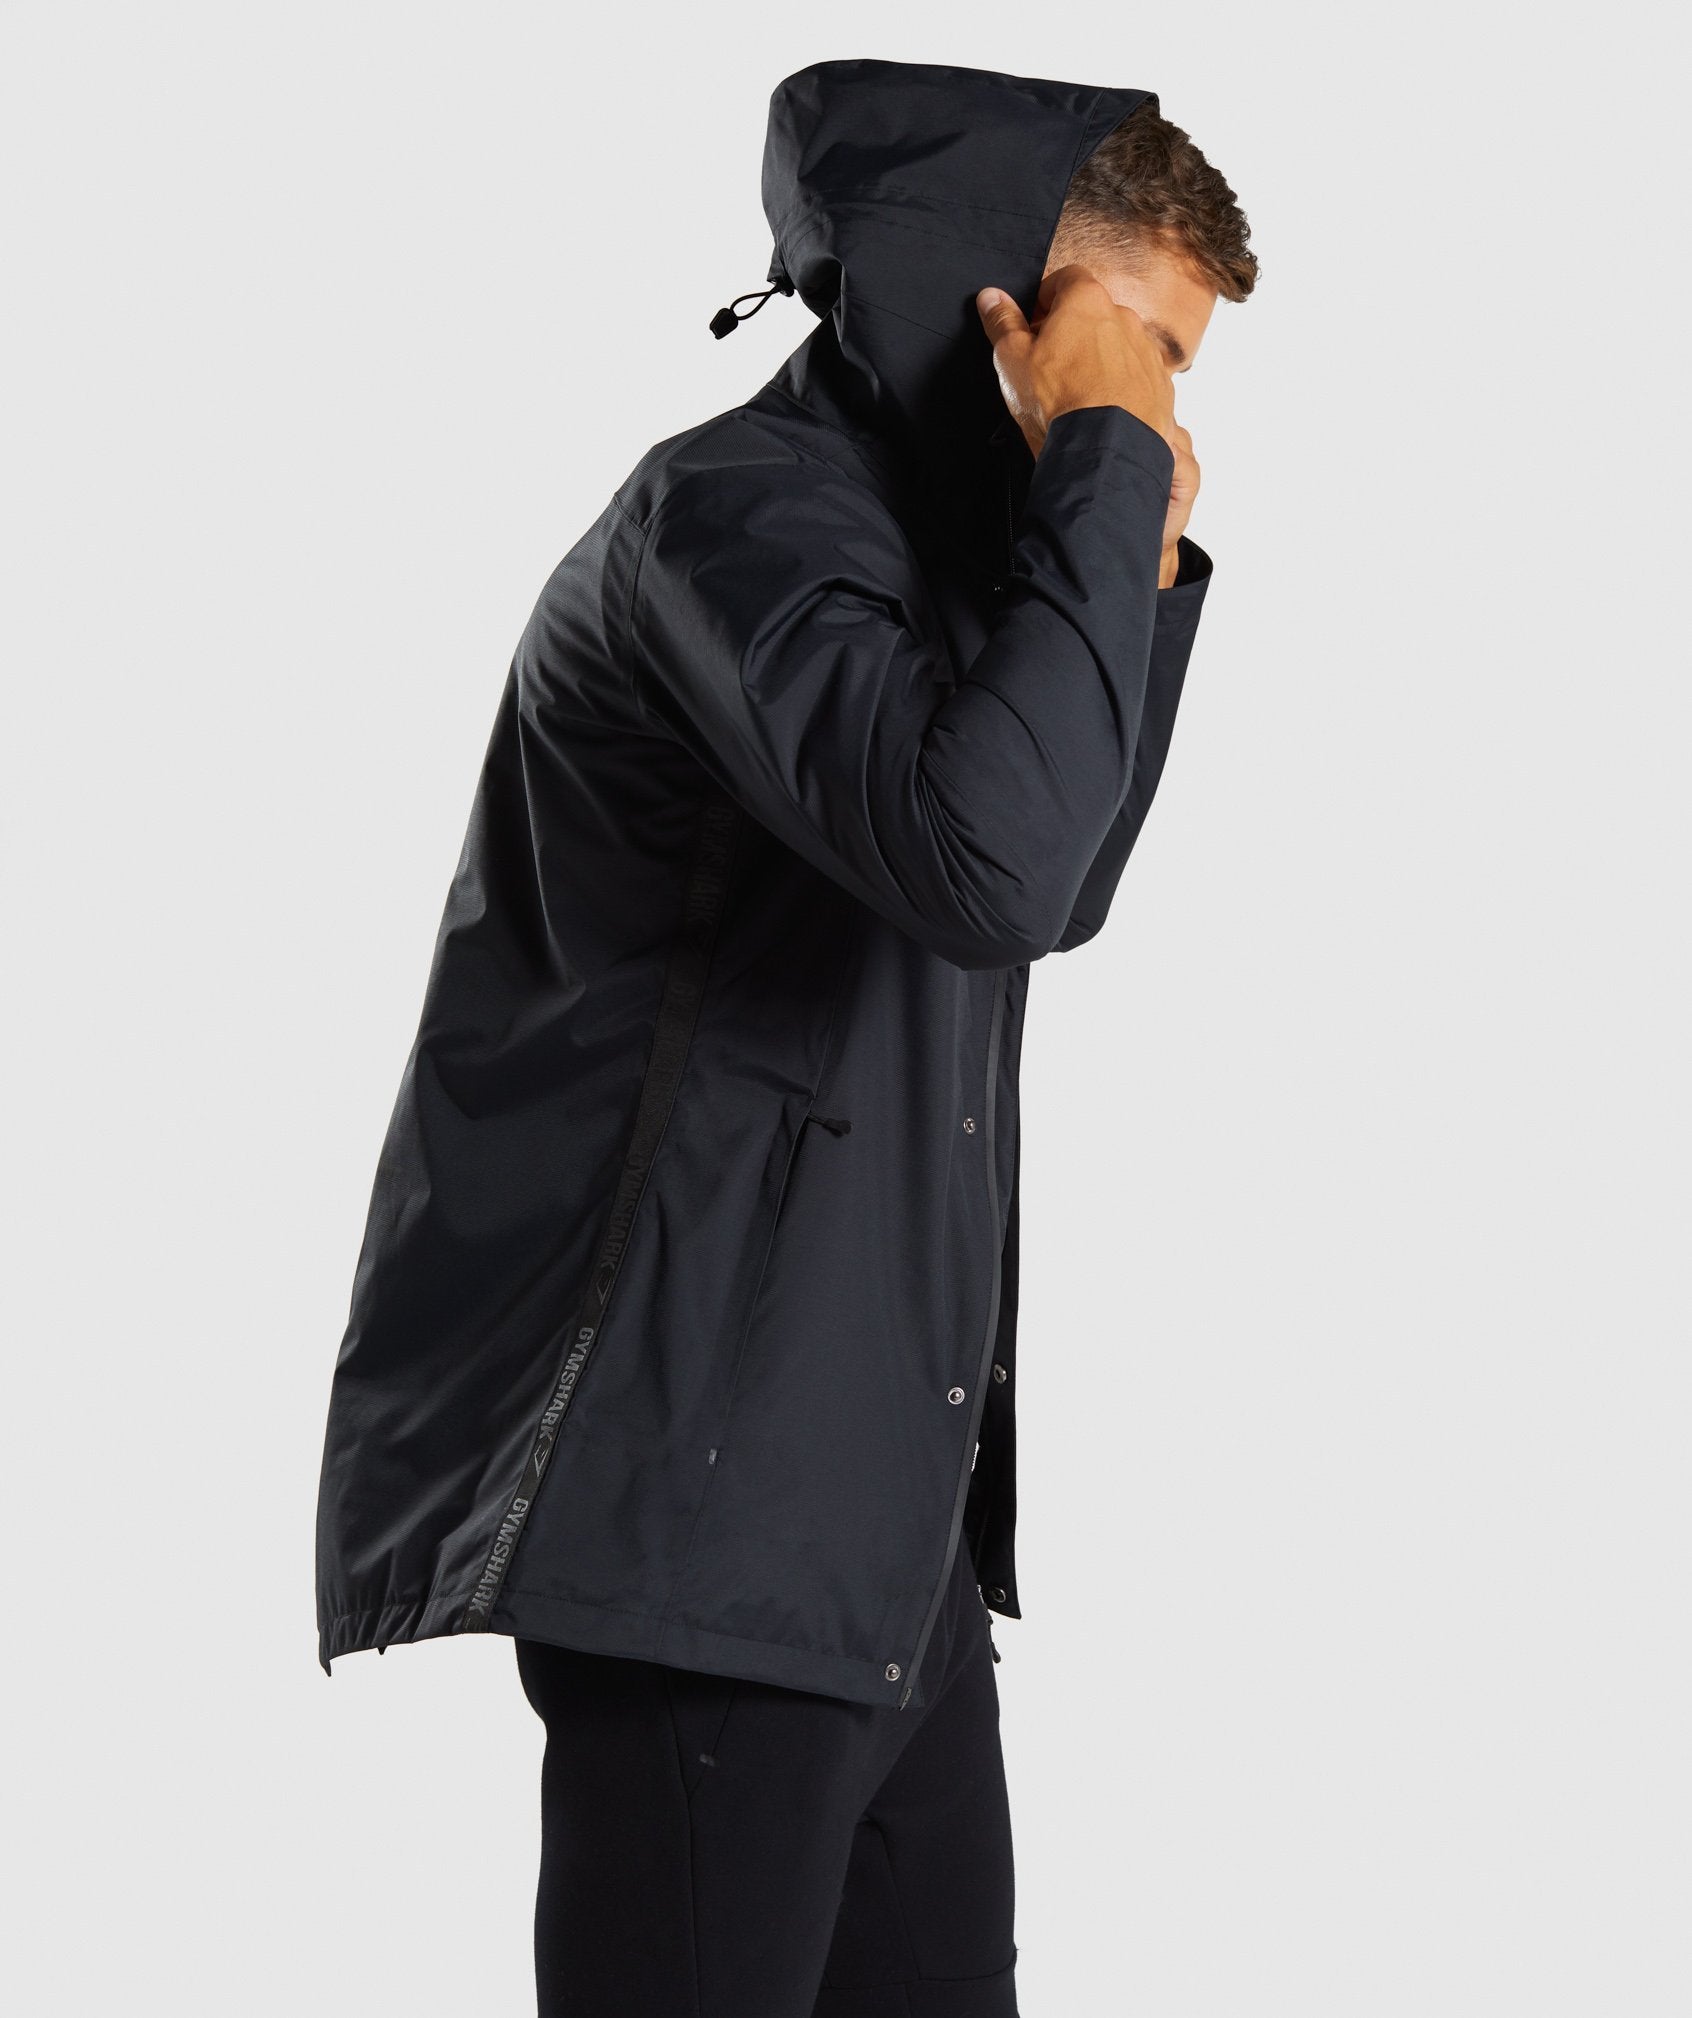 Vortex Waterproof Jacket in Black - view 2